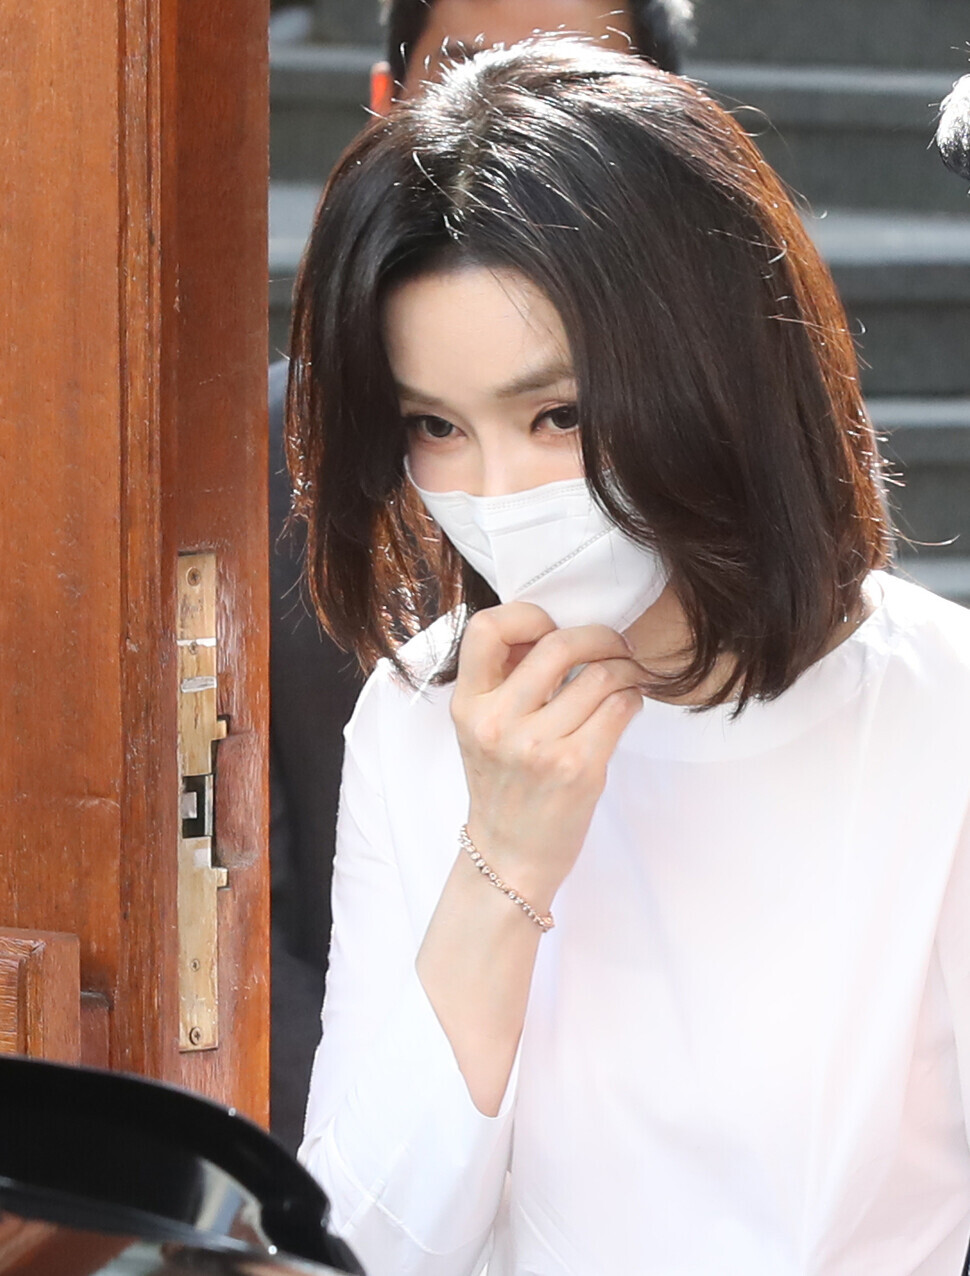 Kim Keon-hee leaves the home of Lee Soon-ja after a visit on June 16. (Yonhap News)